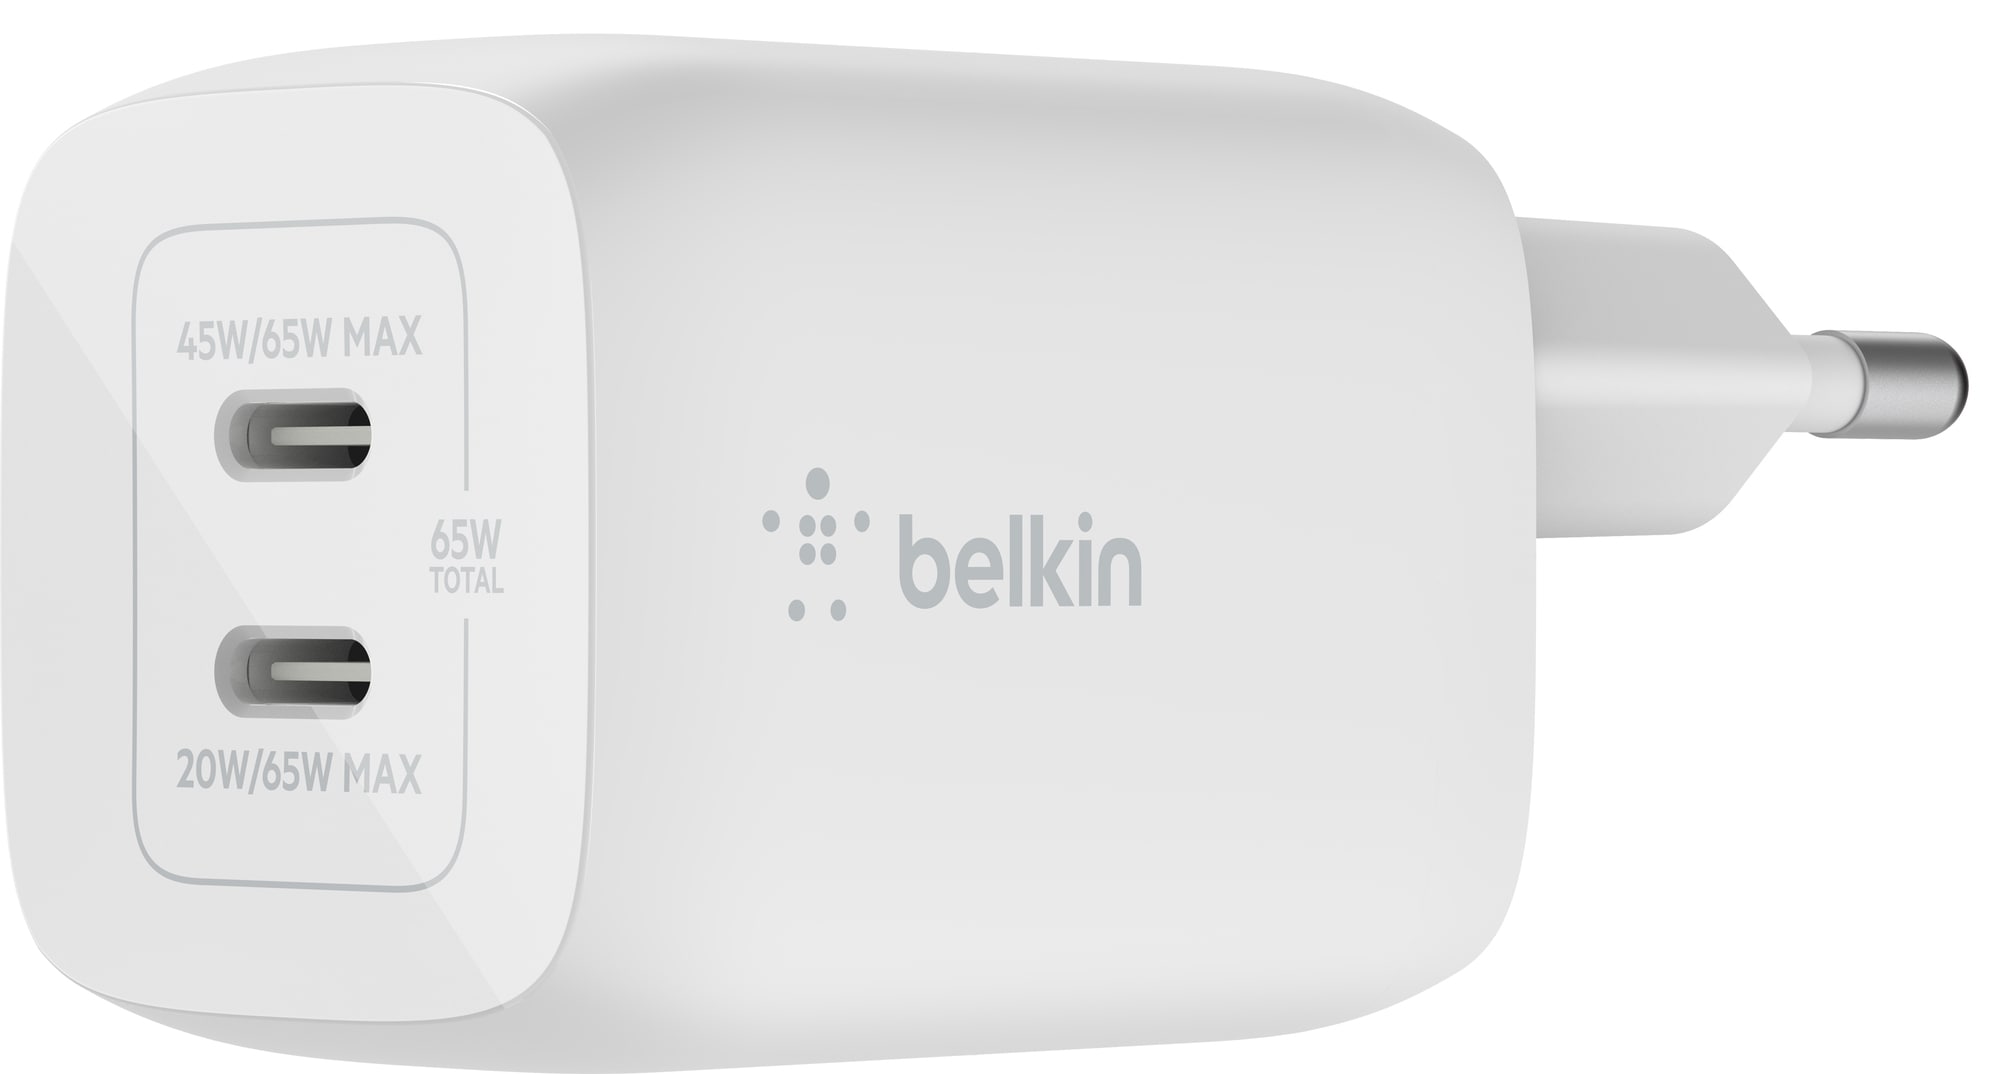 Belkin 65W Dual USB-C laturi - Gigantti verkkokauppa